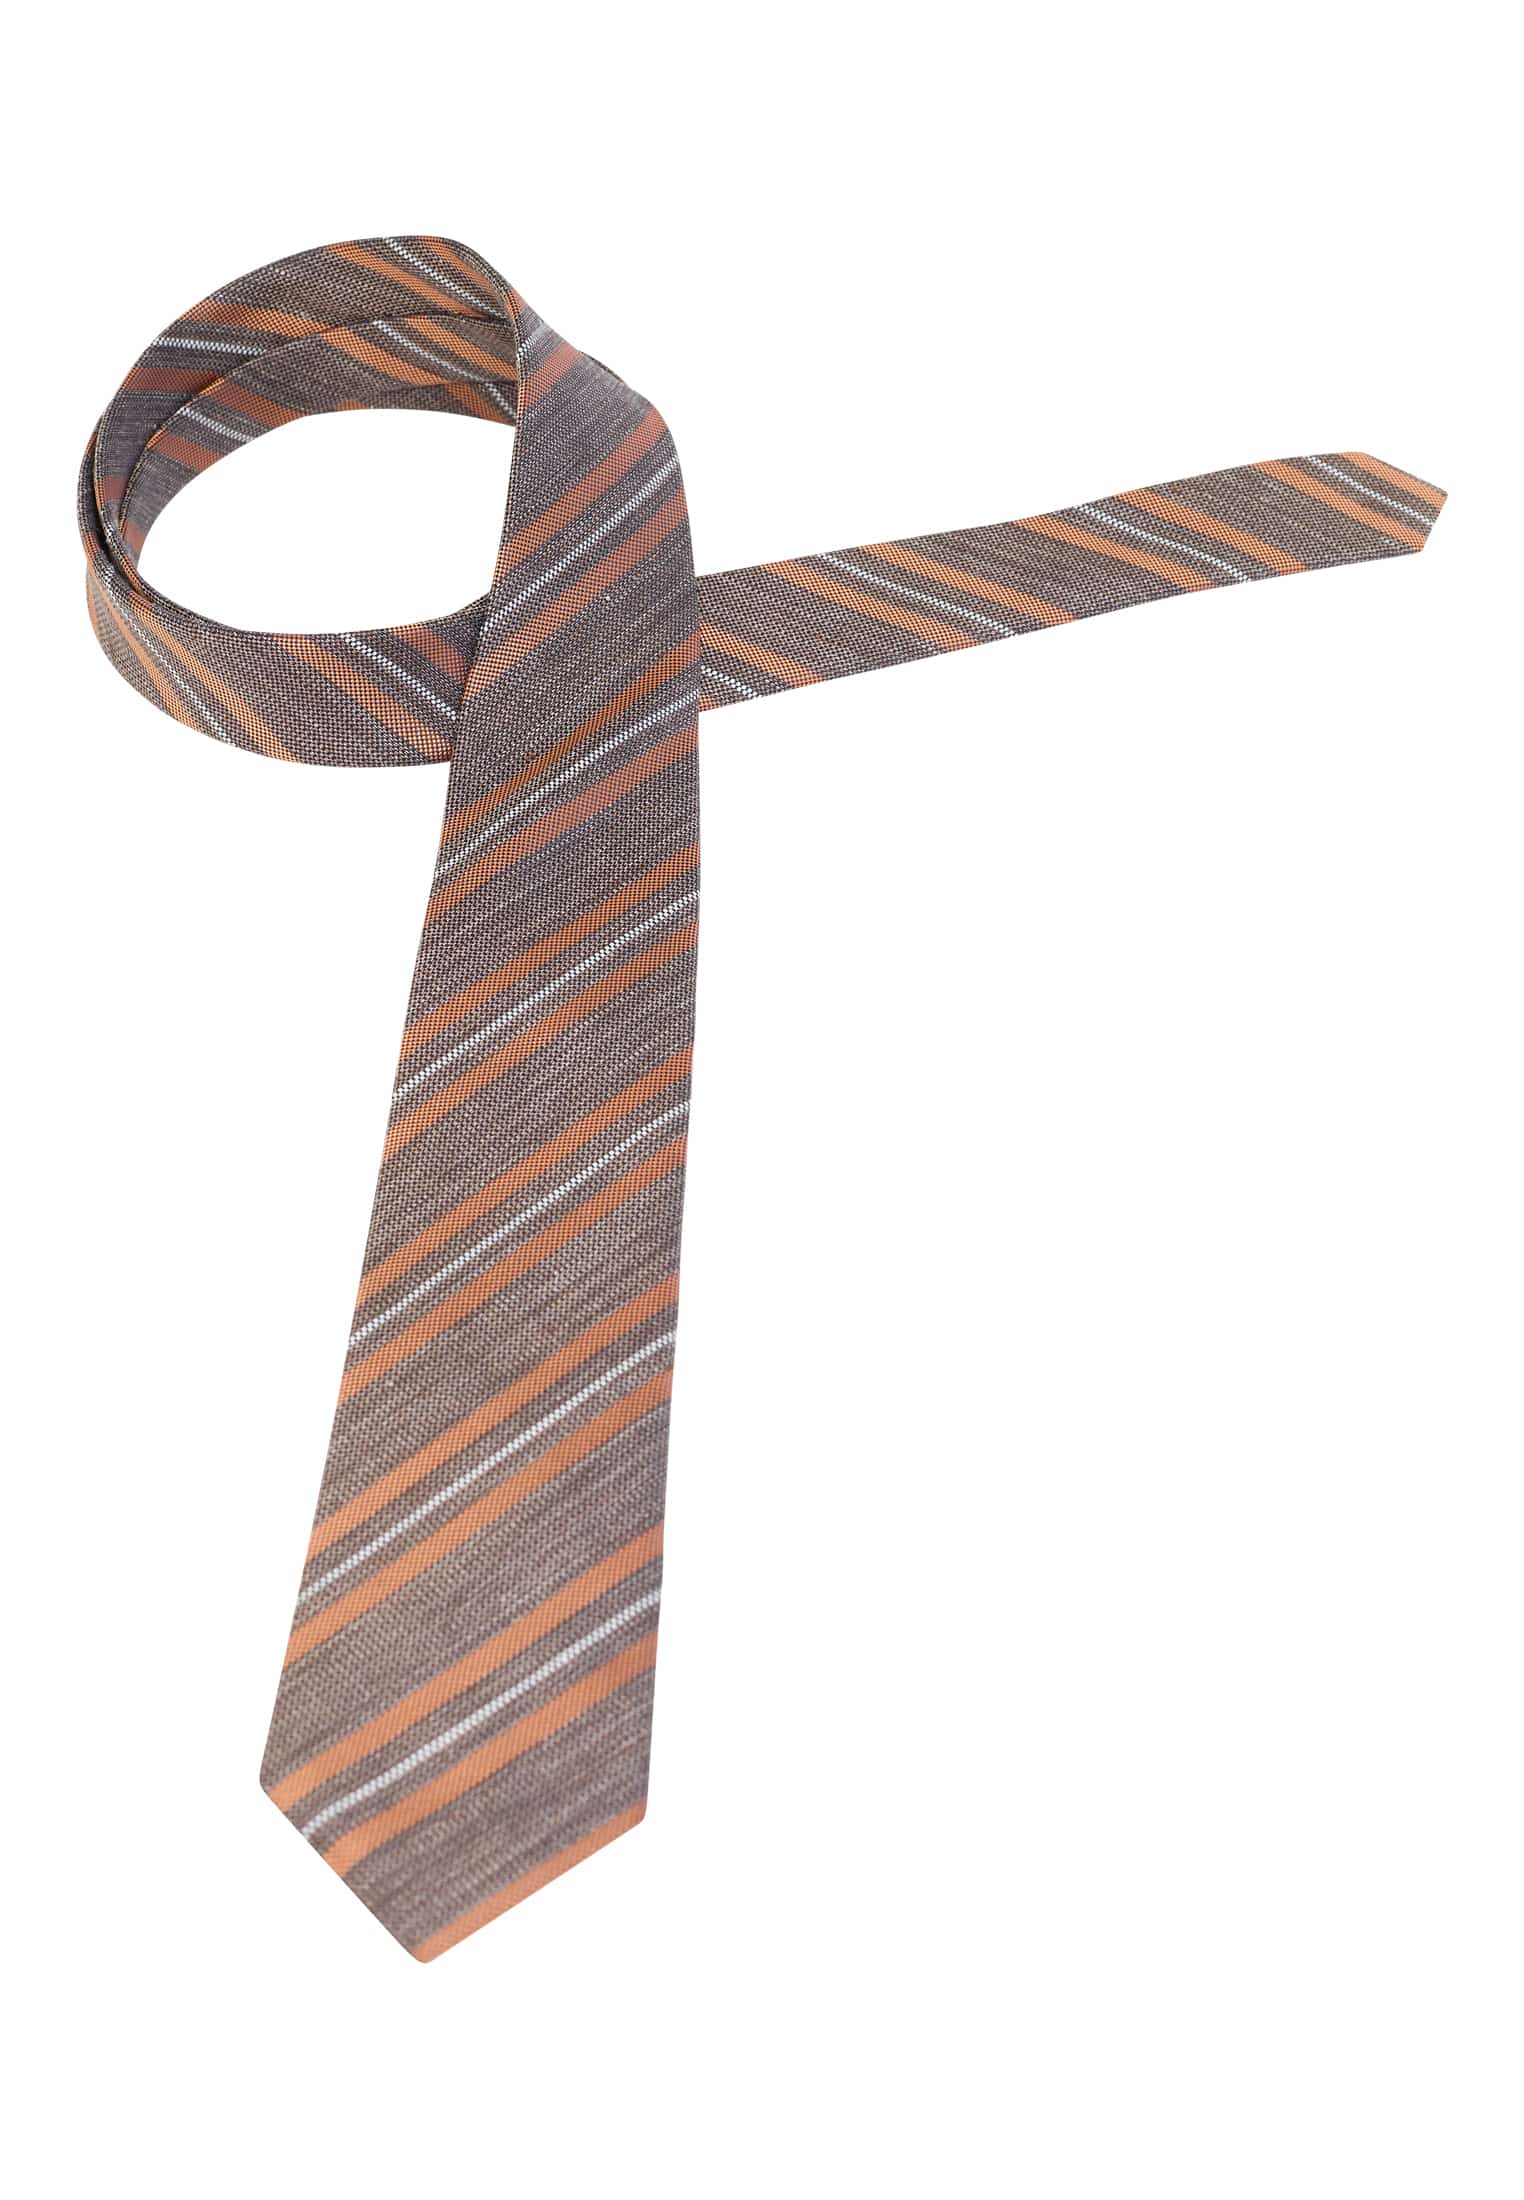 Krawatte in terracotta gemustert | | 142 terracotta | 1AC01978-08-91-142